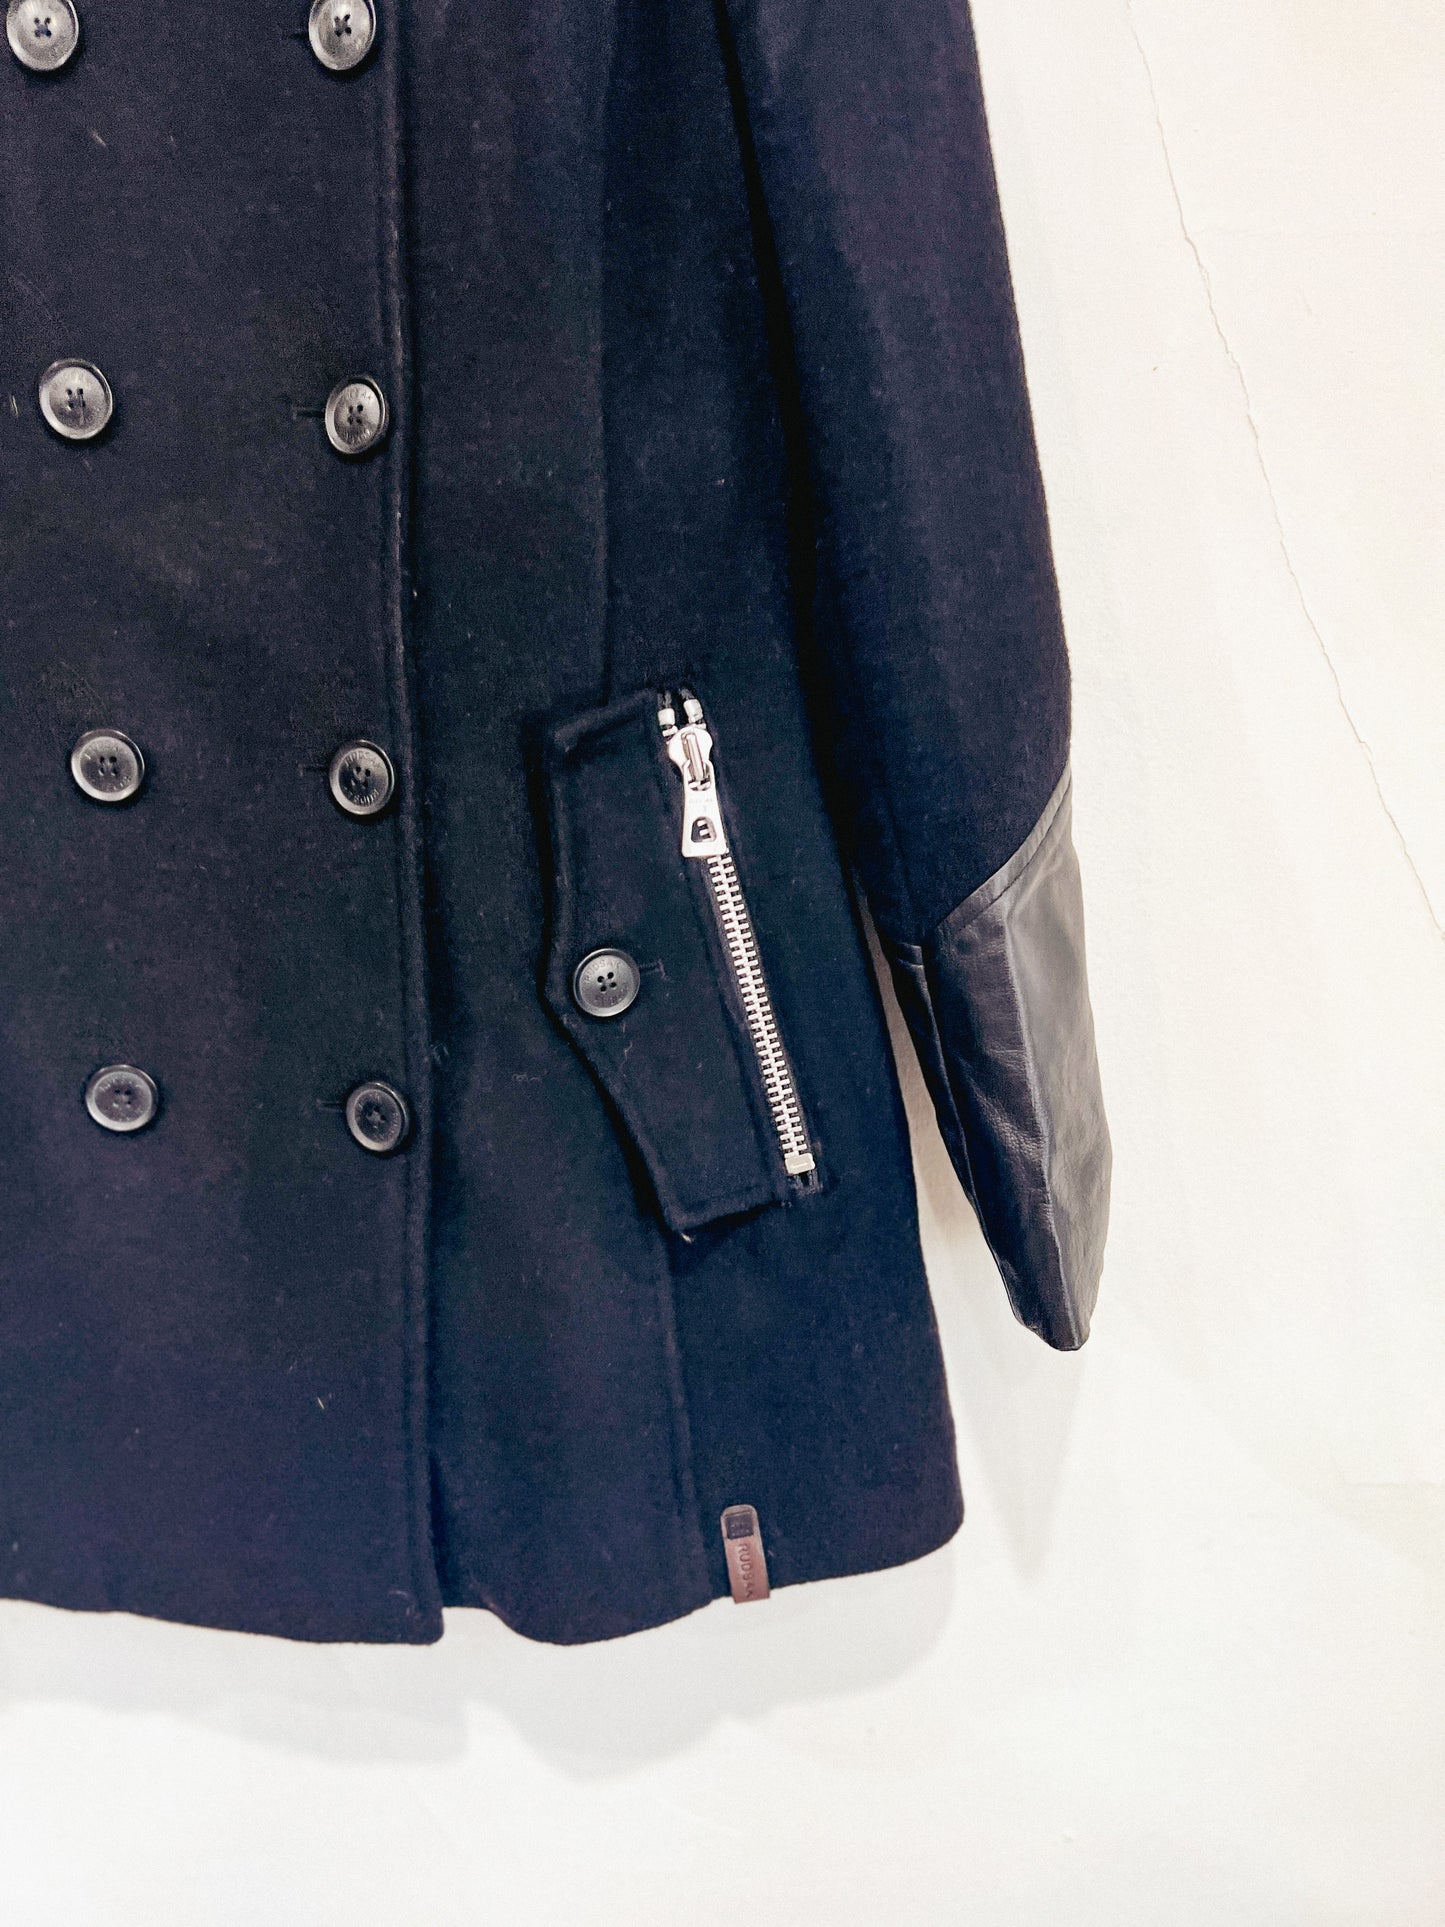 RUDSAK Black Wool & Leather Jacket with Pleated Back (Size S)